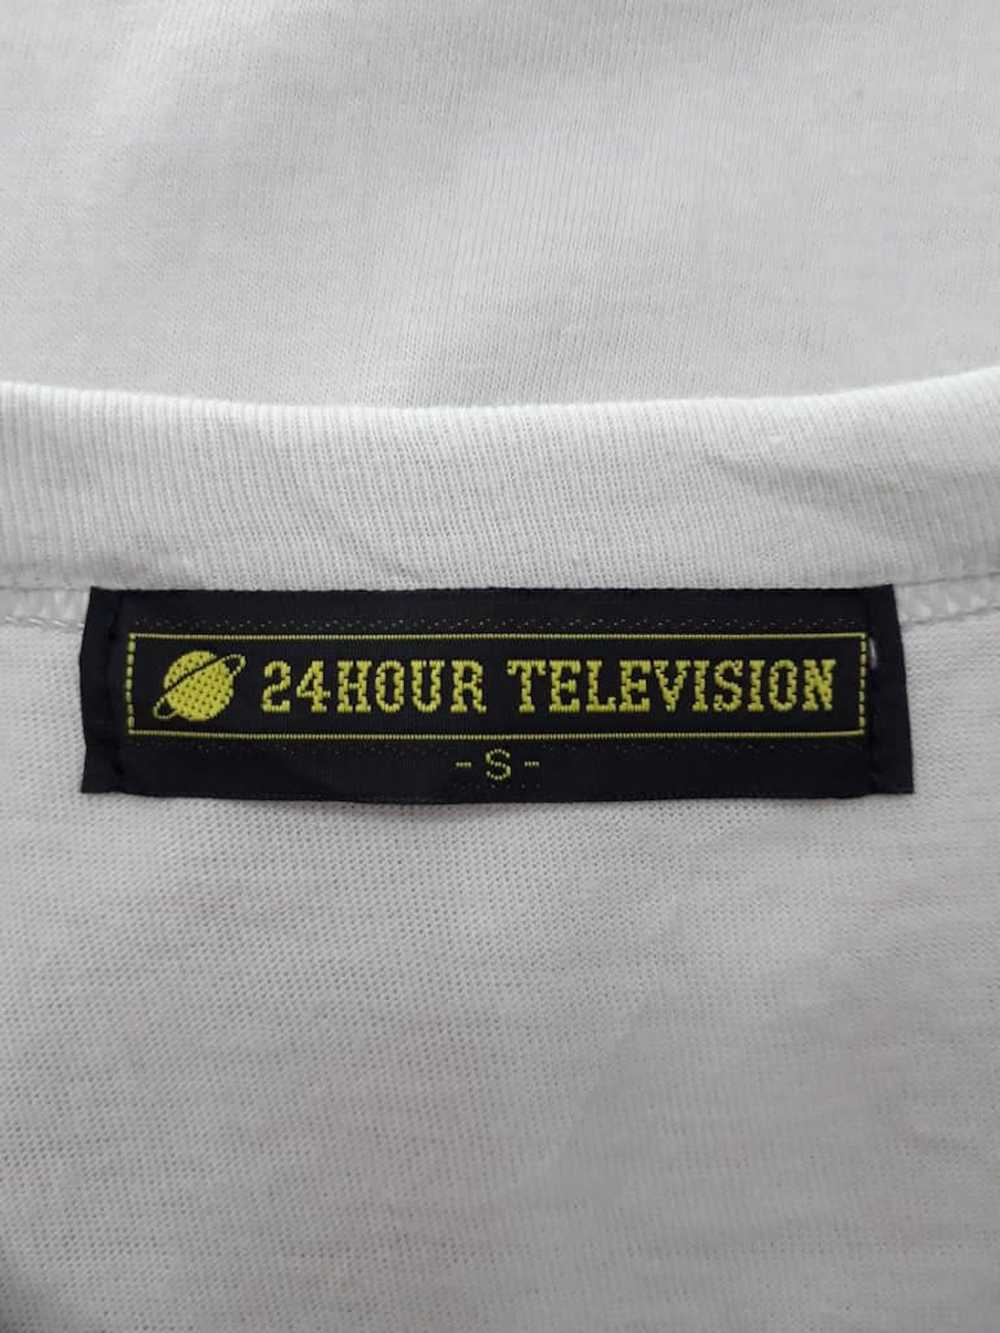 Japanese Brand × Vintage 24 Hour Television - image 5